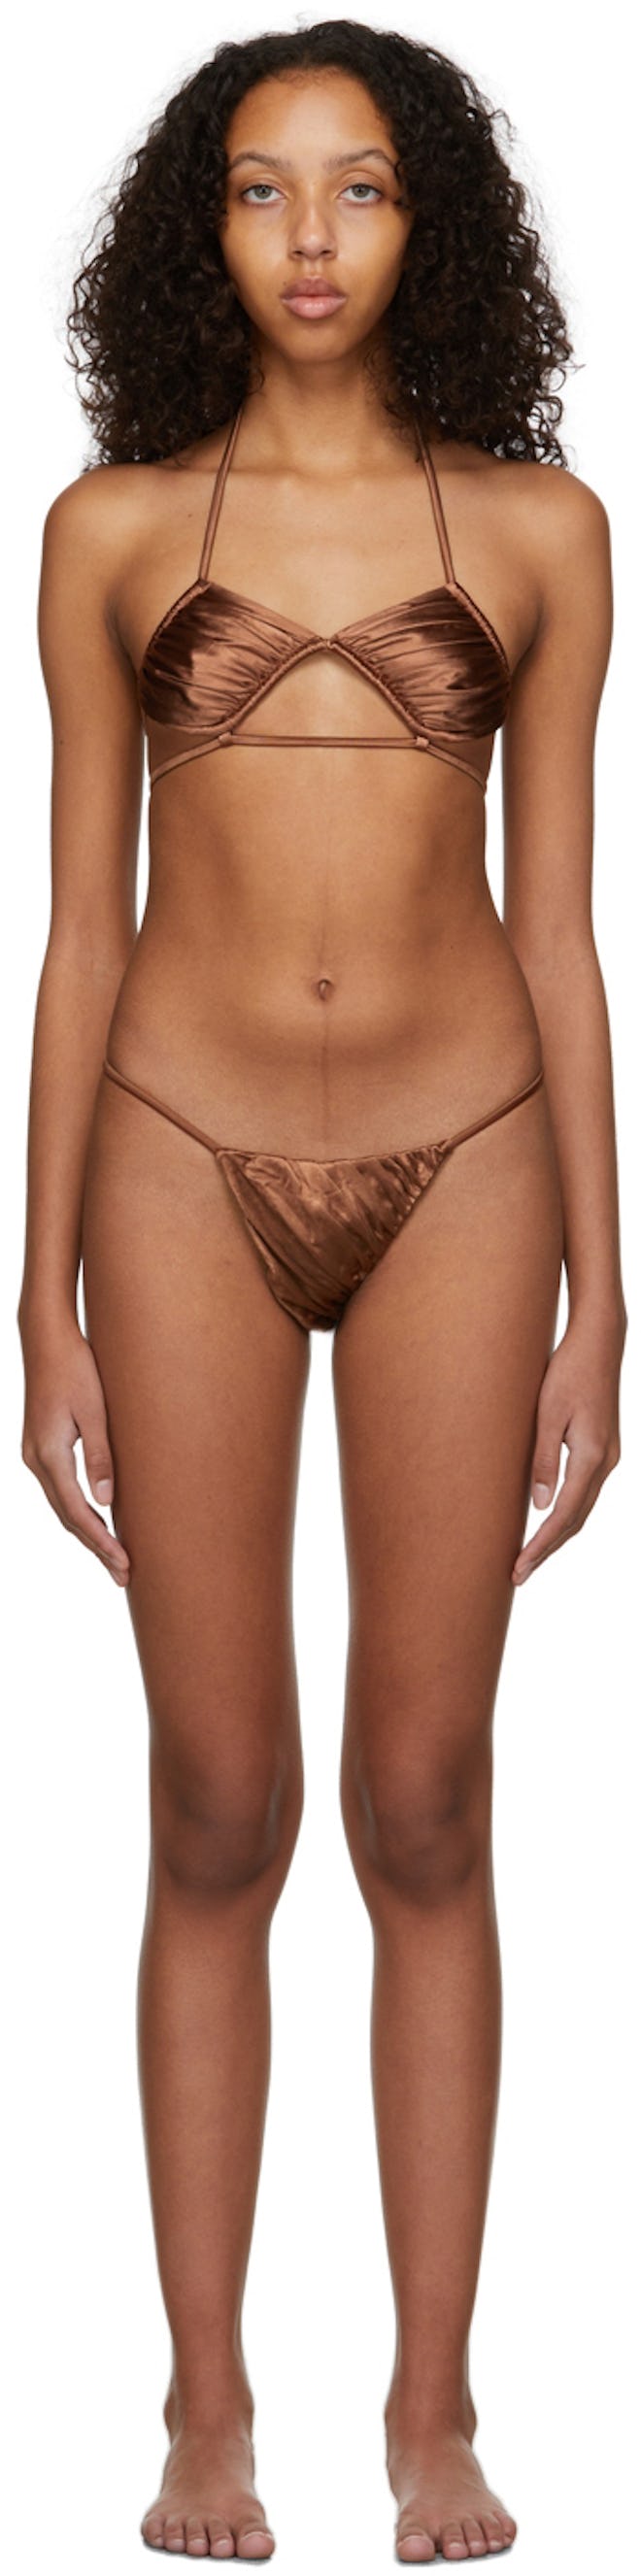 SSENSE Exclusive Brown Sculpture/Flash Bikini Set: image 1